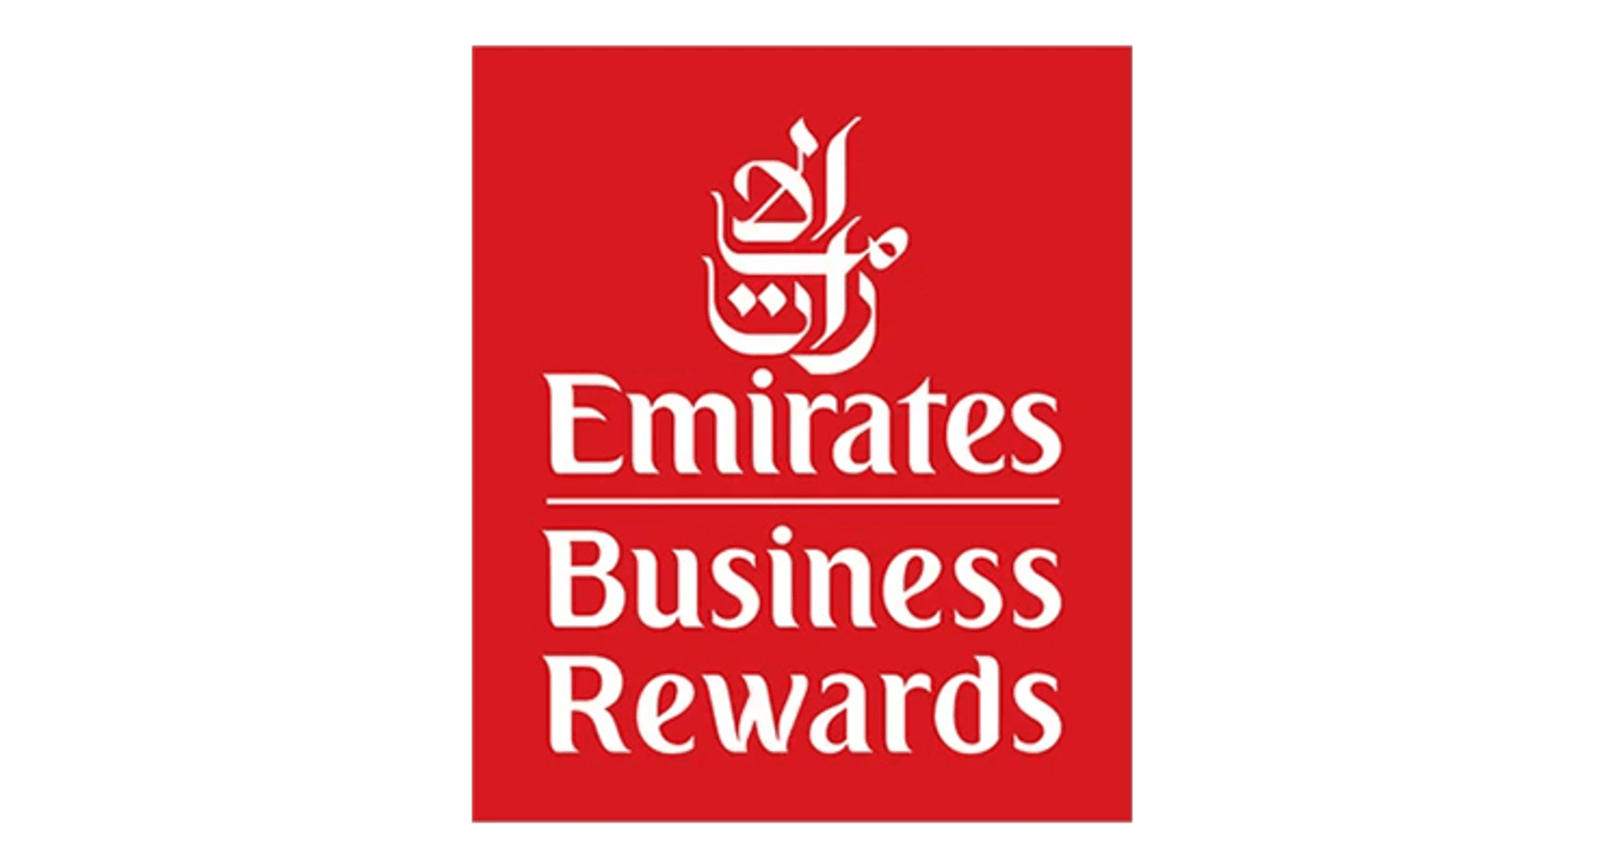 Emirates Business Rewards logo